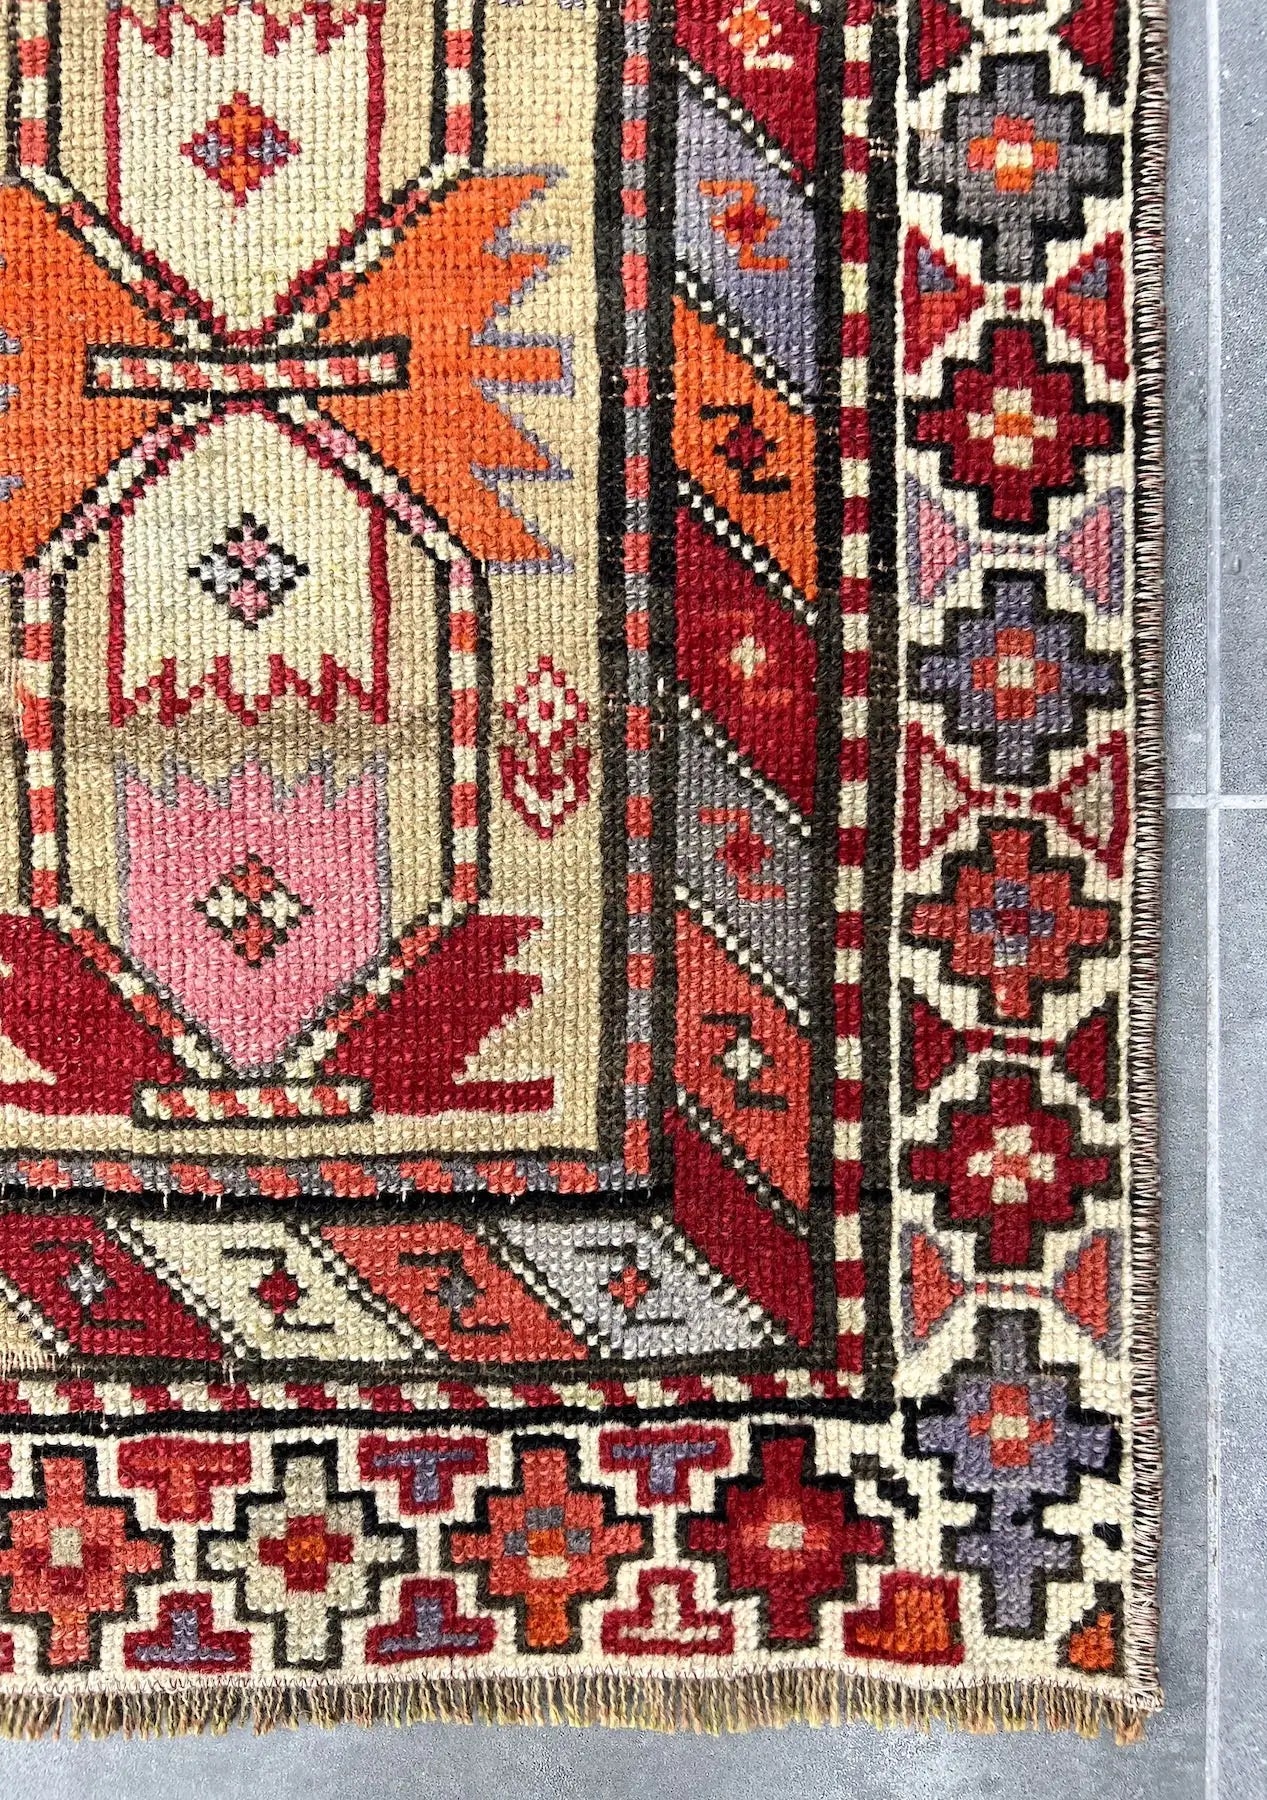 Yasmine - Vintage Persian Rug - kudenrugs